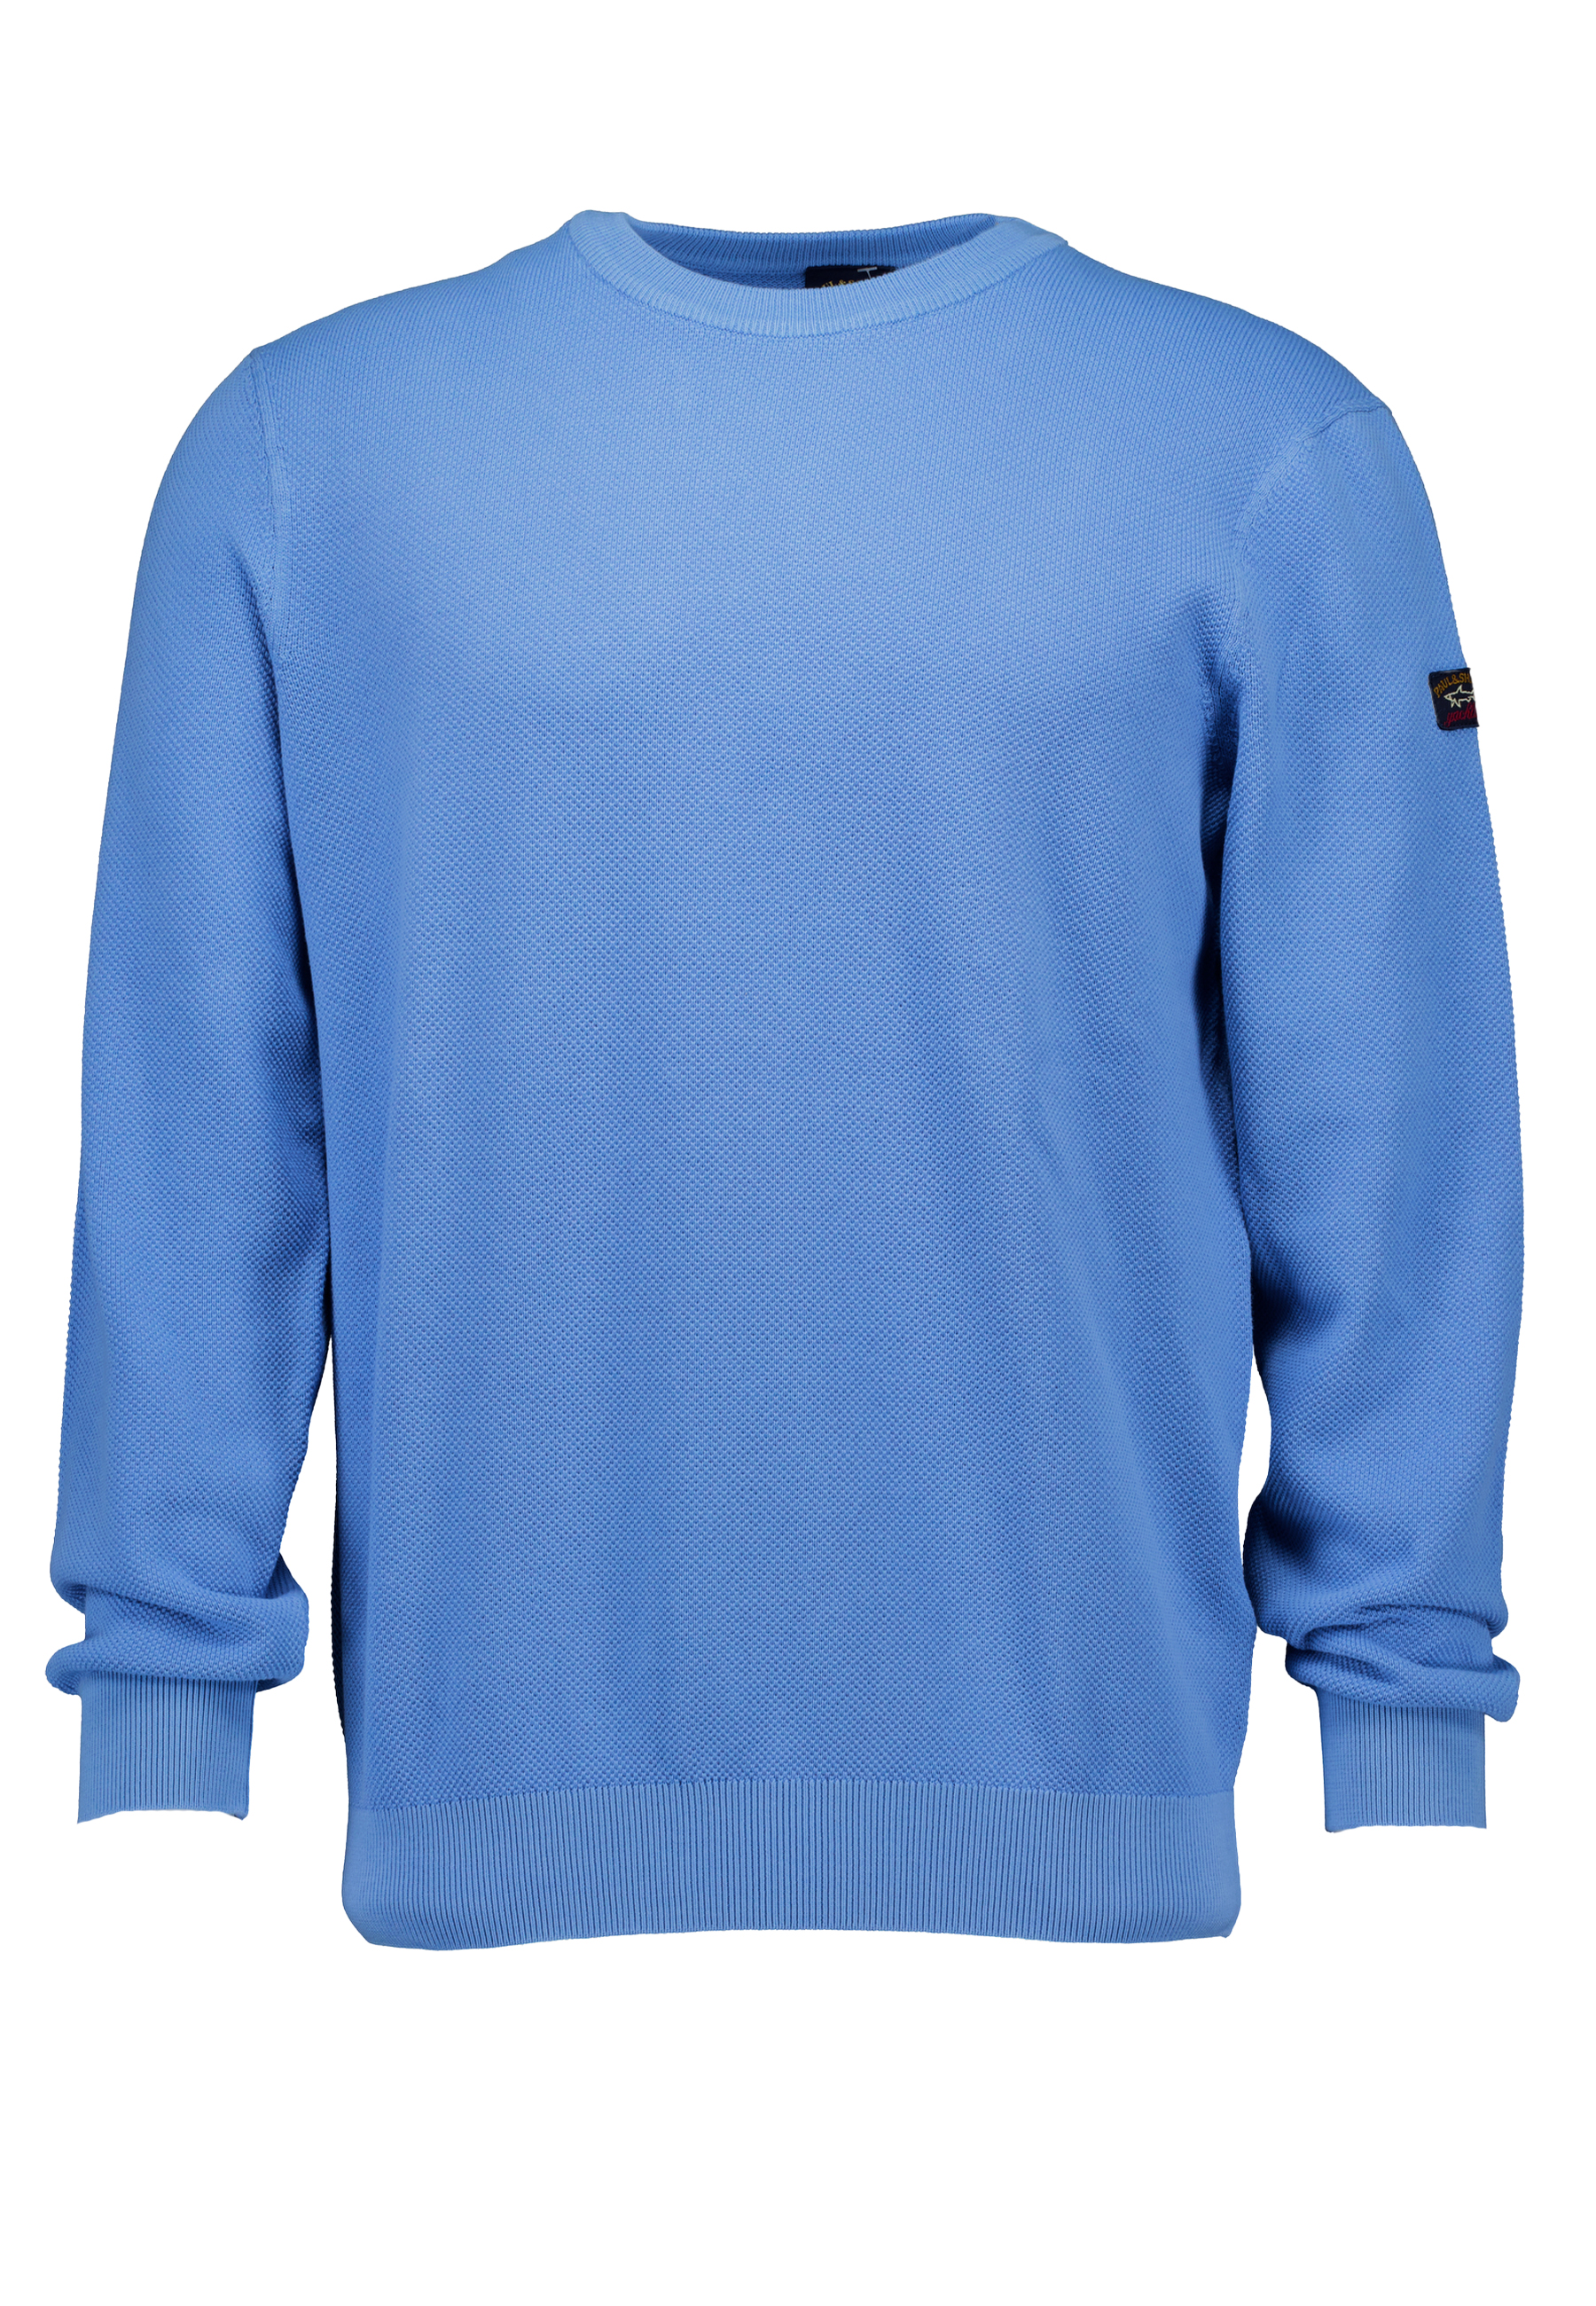 Paul & Shark Trui Lichtblauw maat XL Garment dyed sweaters lichtblauw